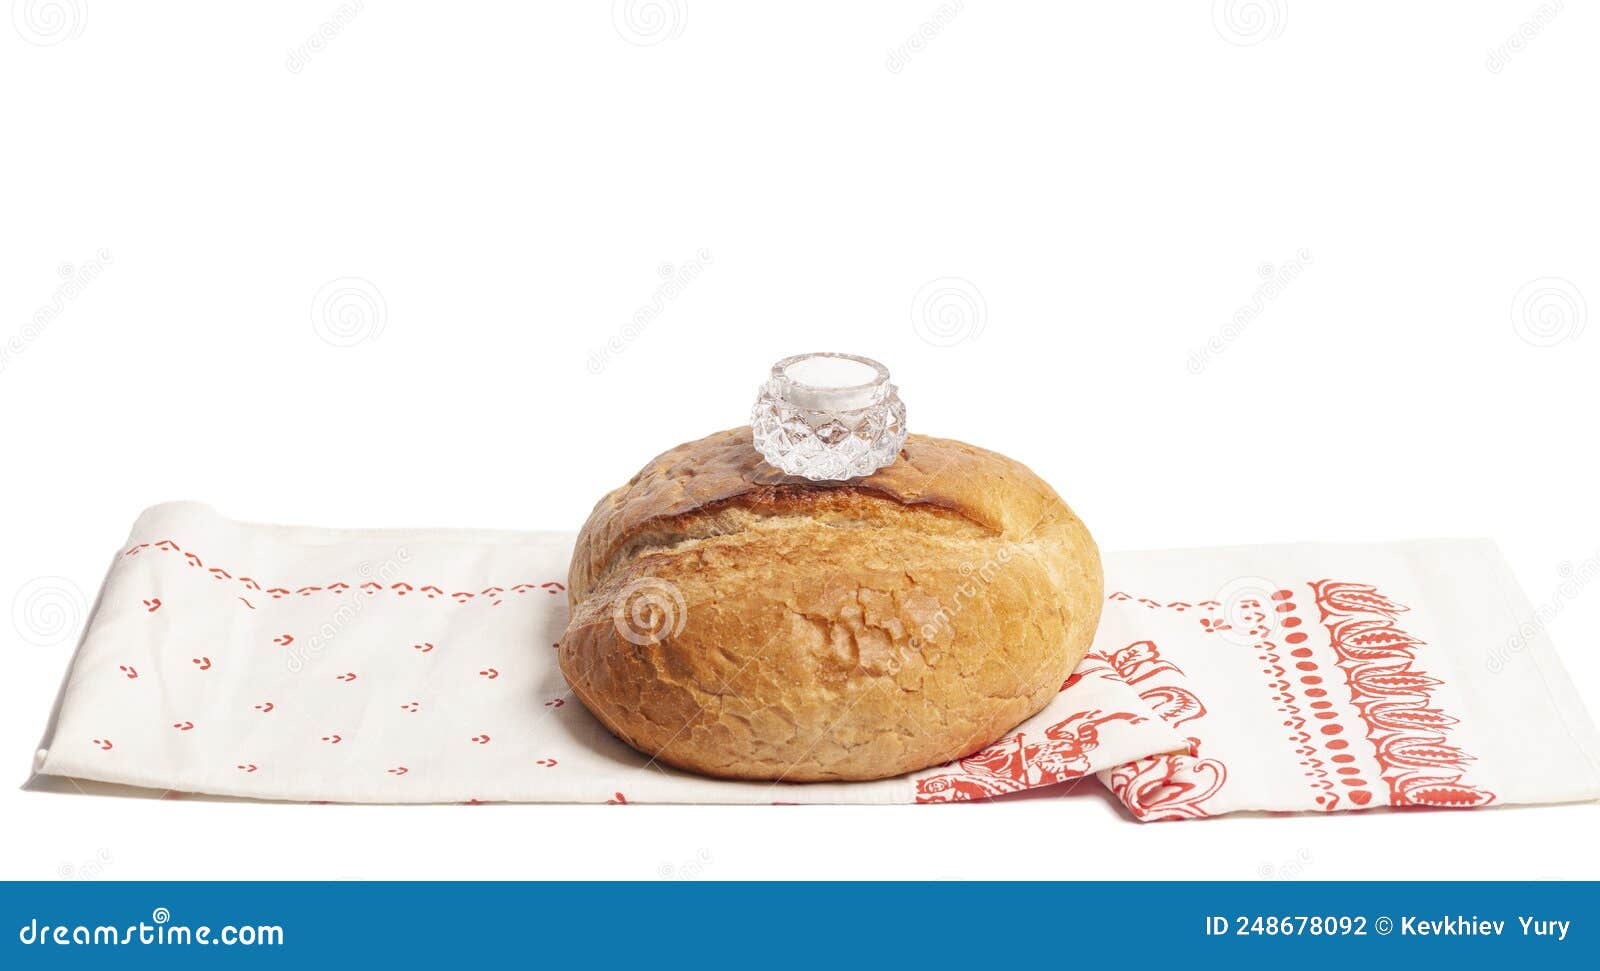 Bread and Salt Hospitality Symbol Ceremonial Towel/Table Runner